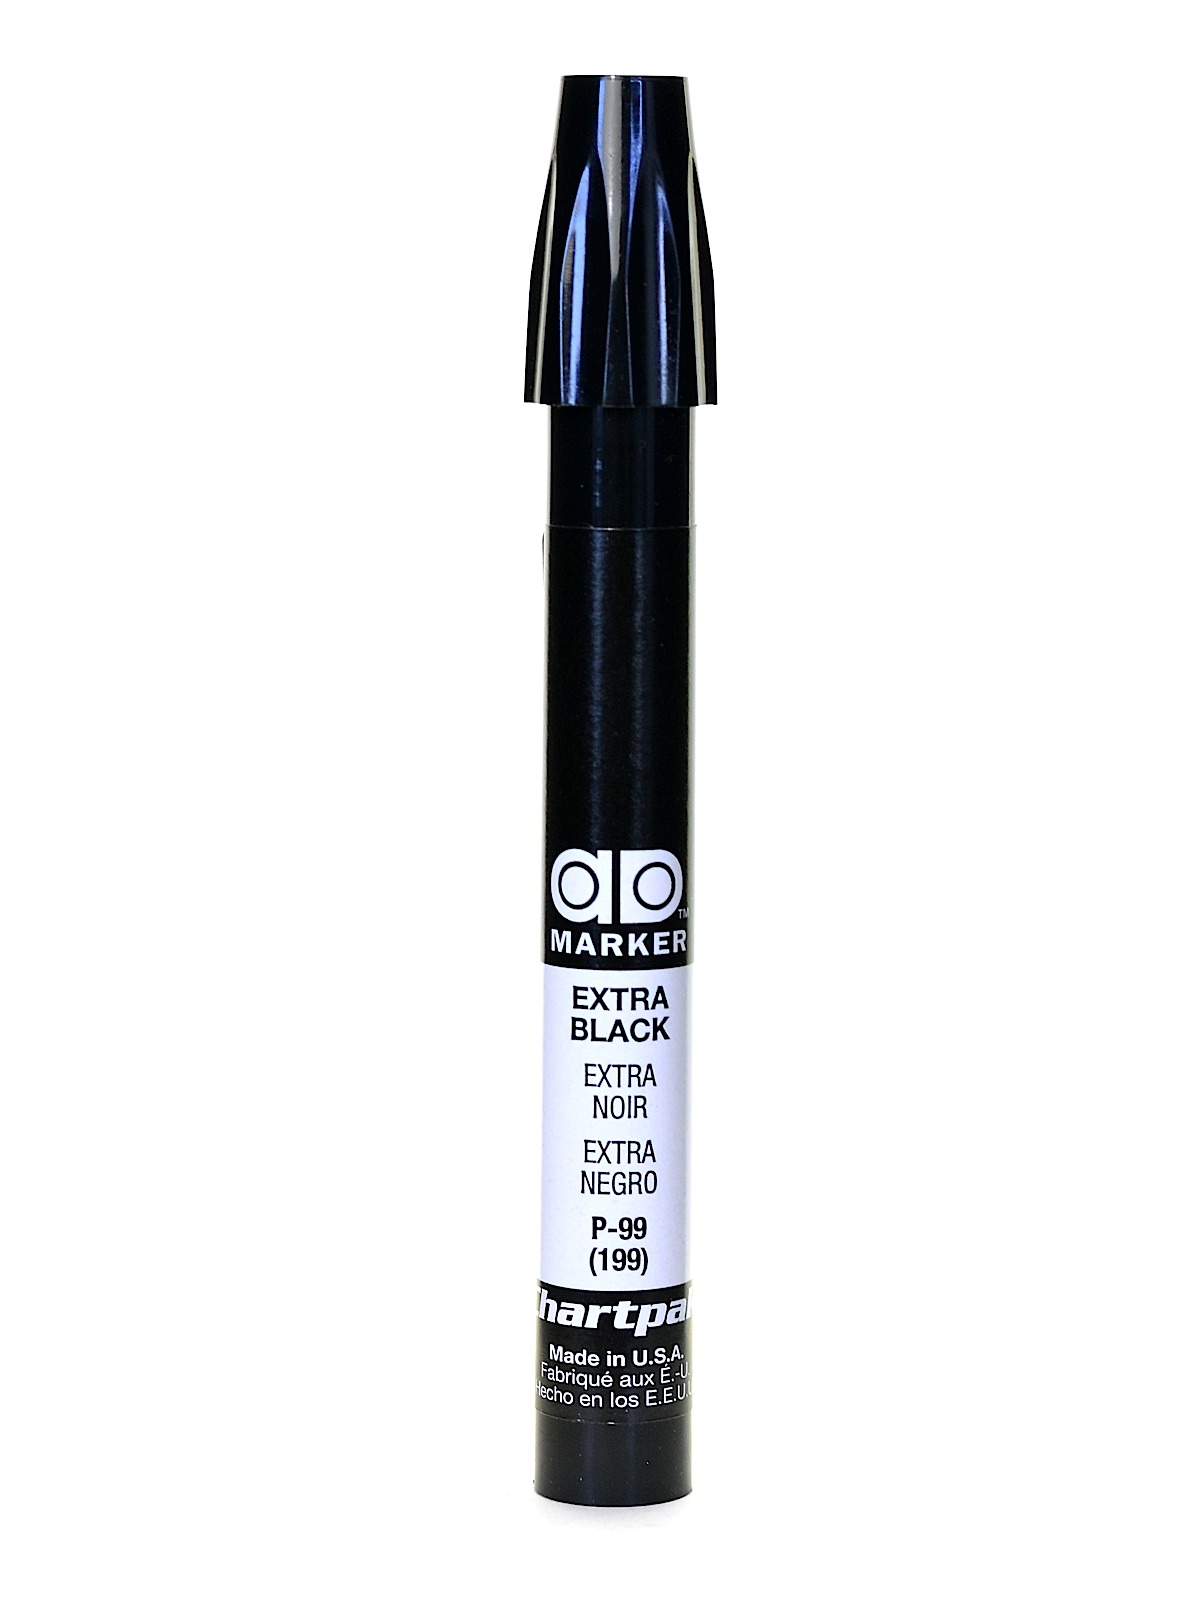 Ad Markers Extra Black Tri-nib